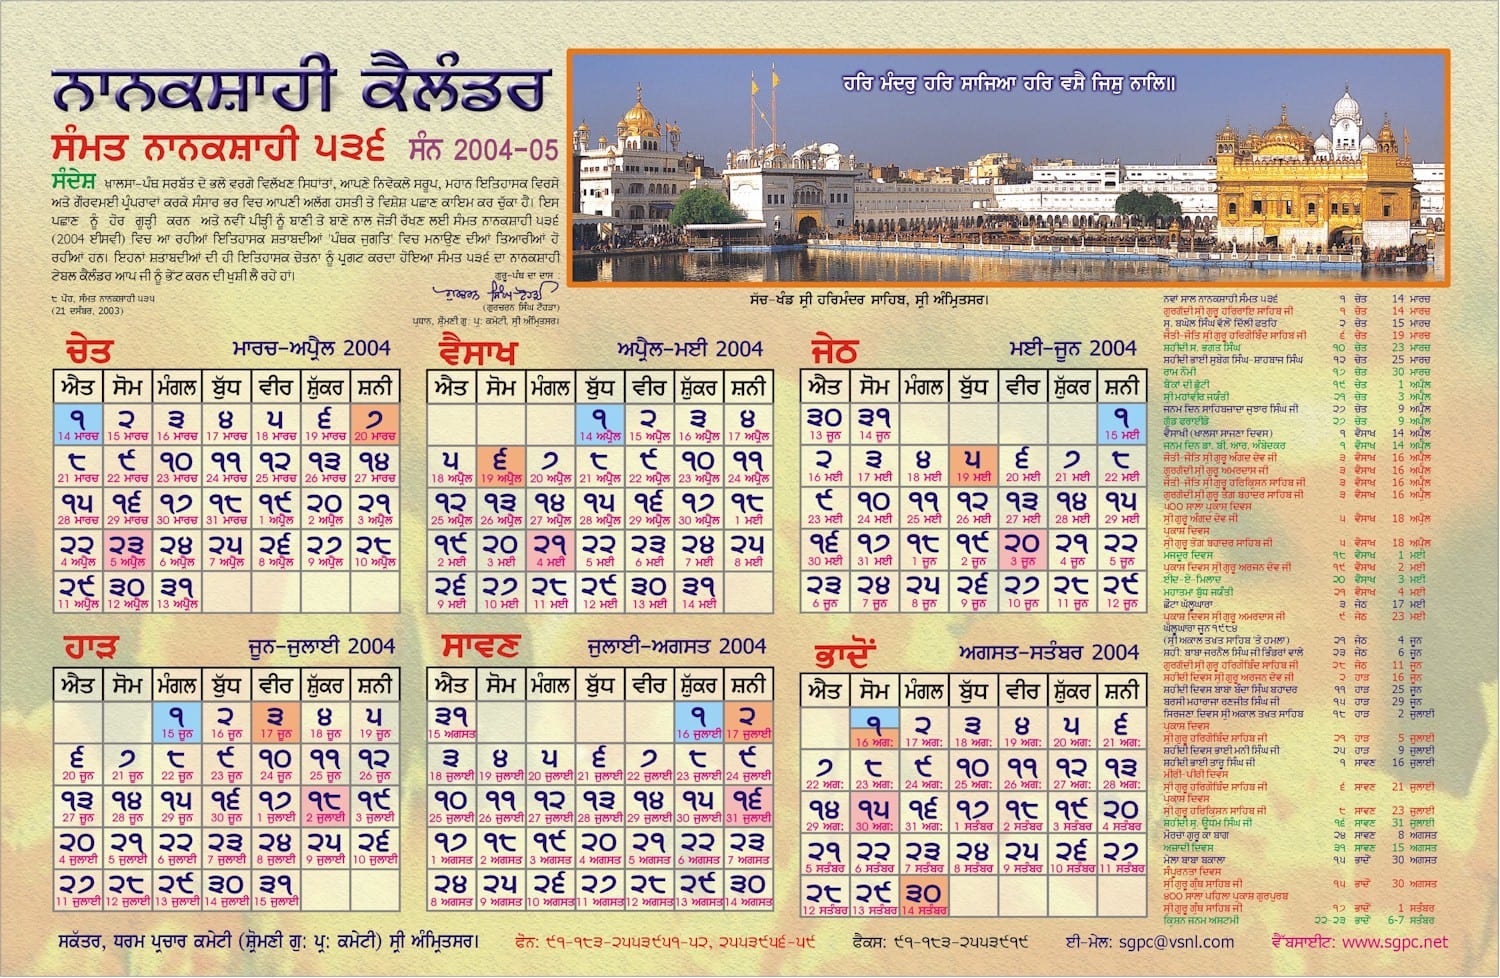 Nanakshahi Calendar Customize and Print